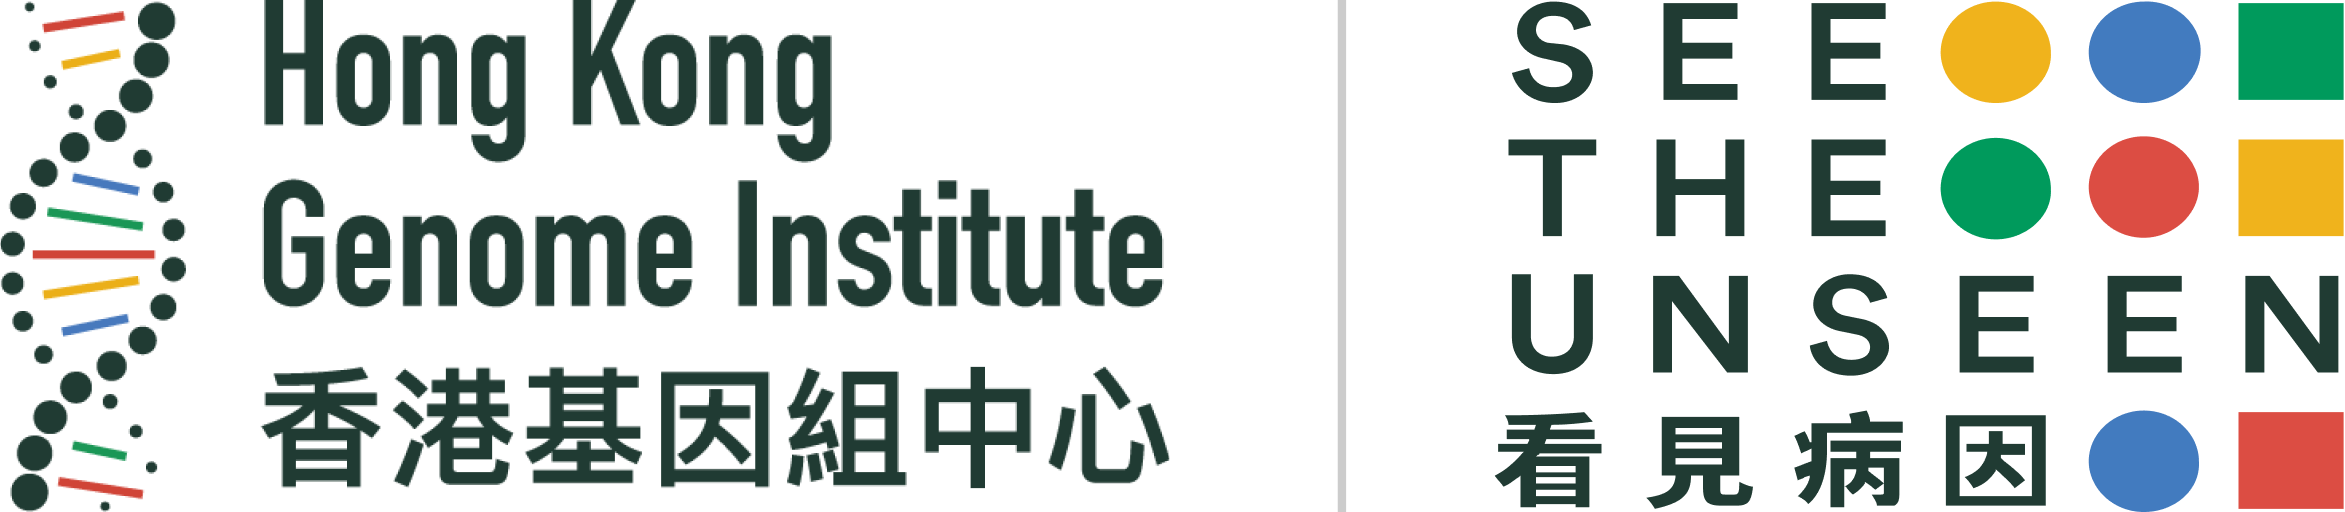 Hong Kong Genome Institute